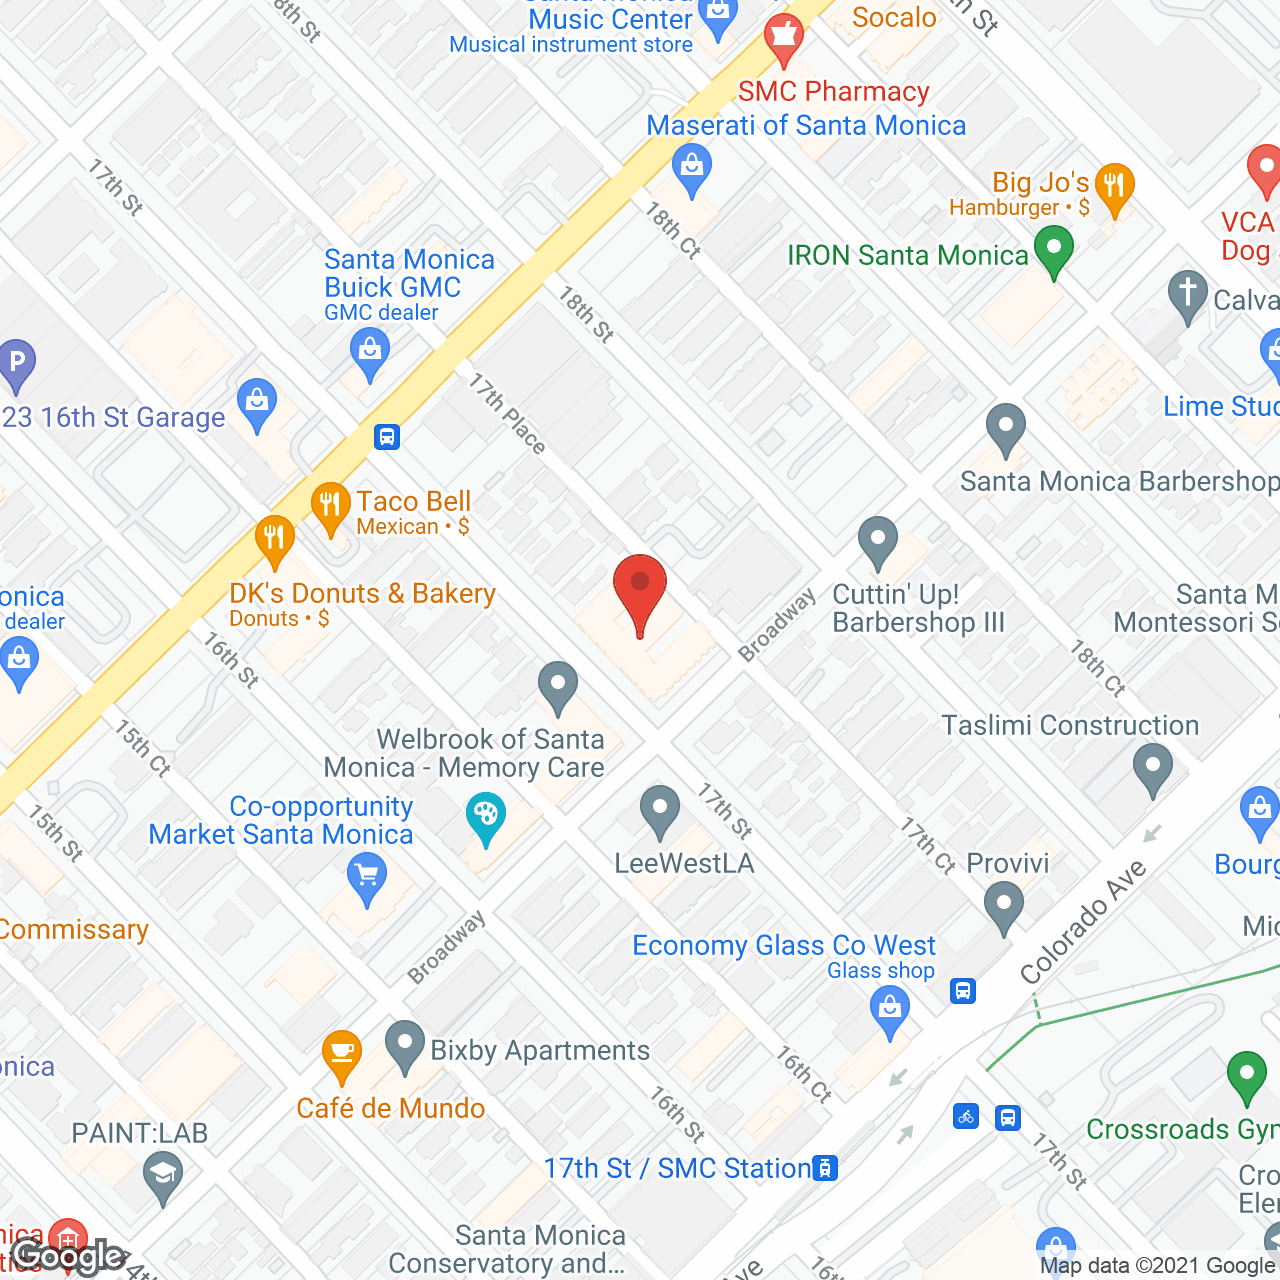 Savant of Santa Monica in google map